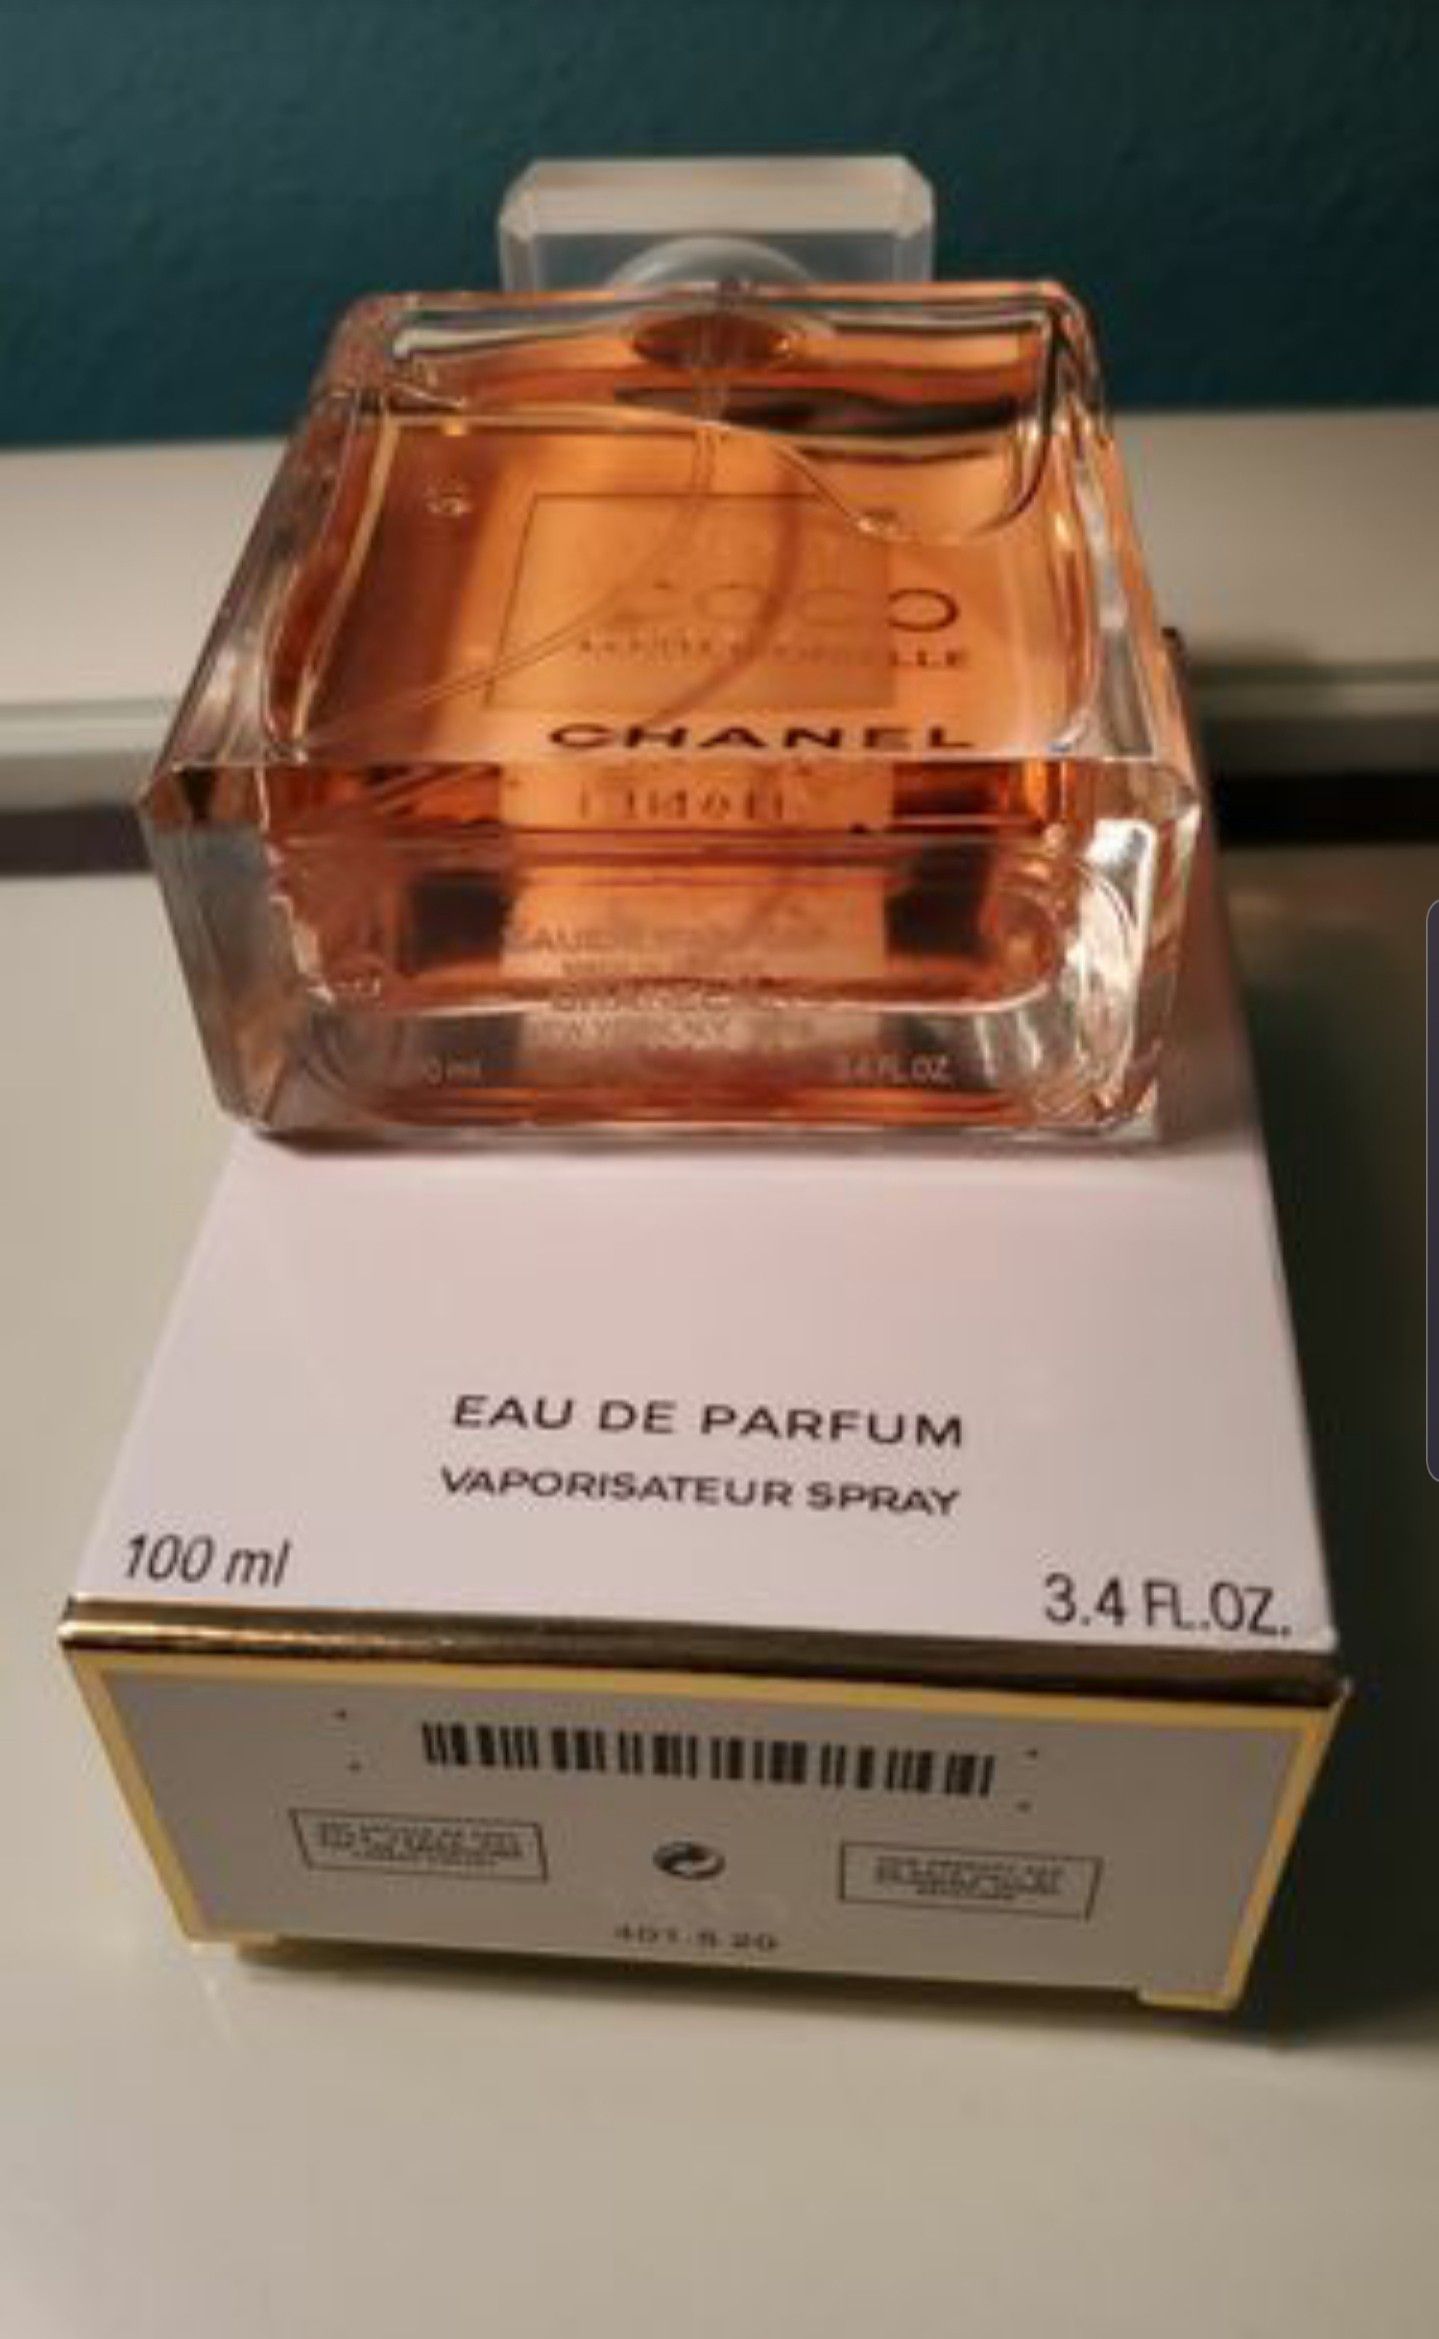 Coco Mademoiselle By Chanel 3.4oz Women's Eau de Parfum Spray 100mL New &  Sealed for Sale in Wimauma, FL - OfferUp